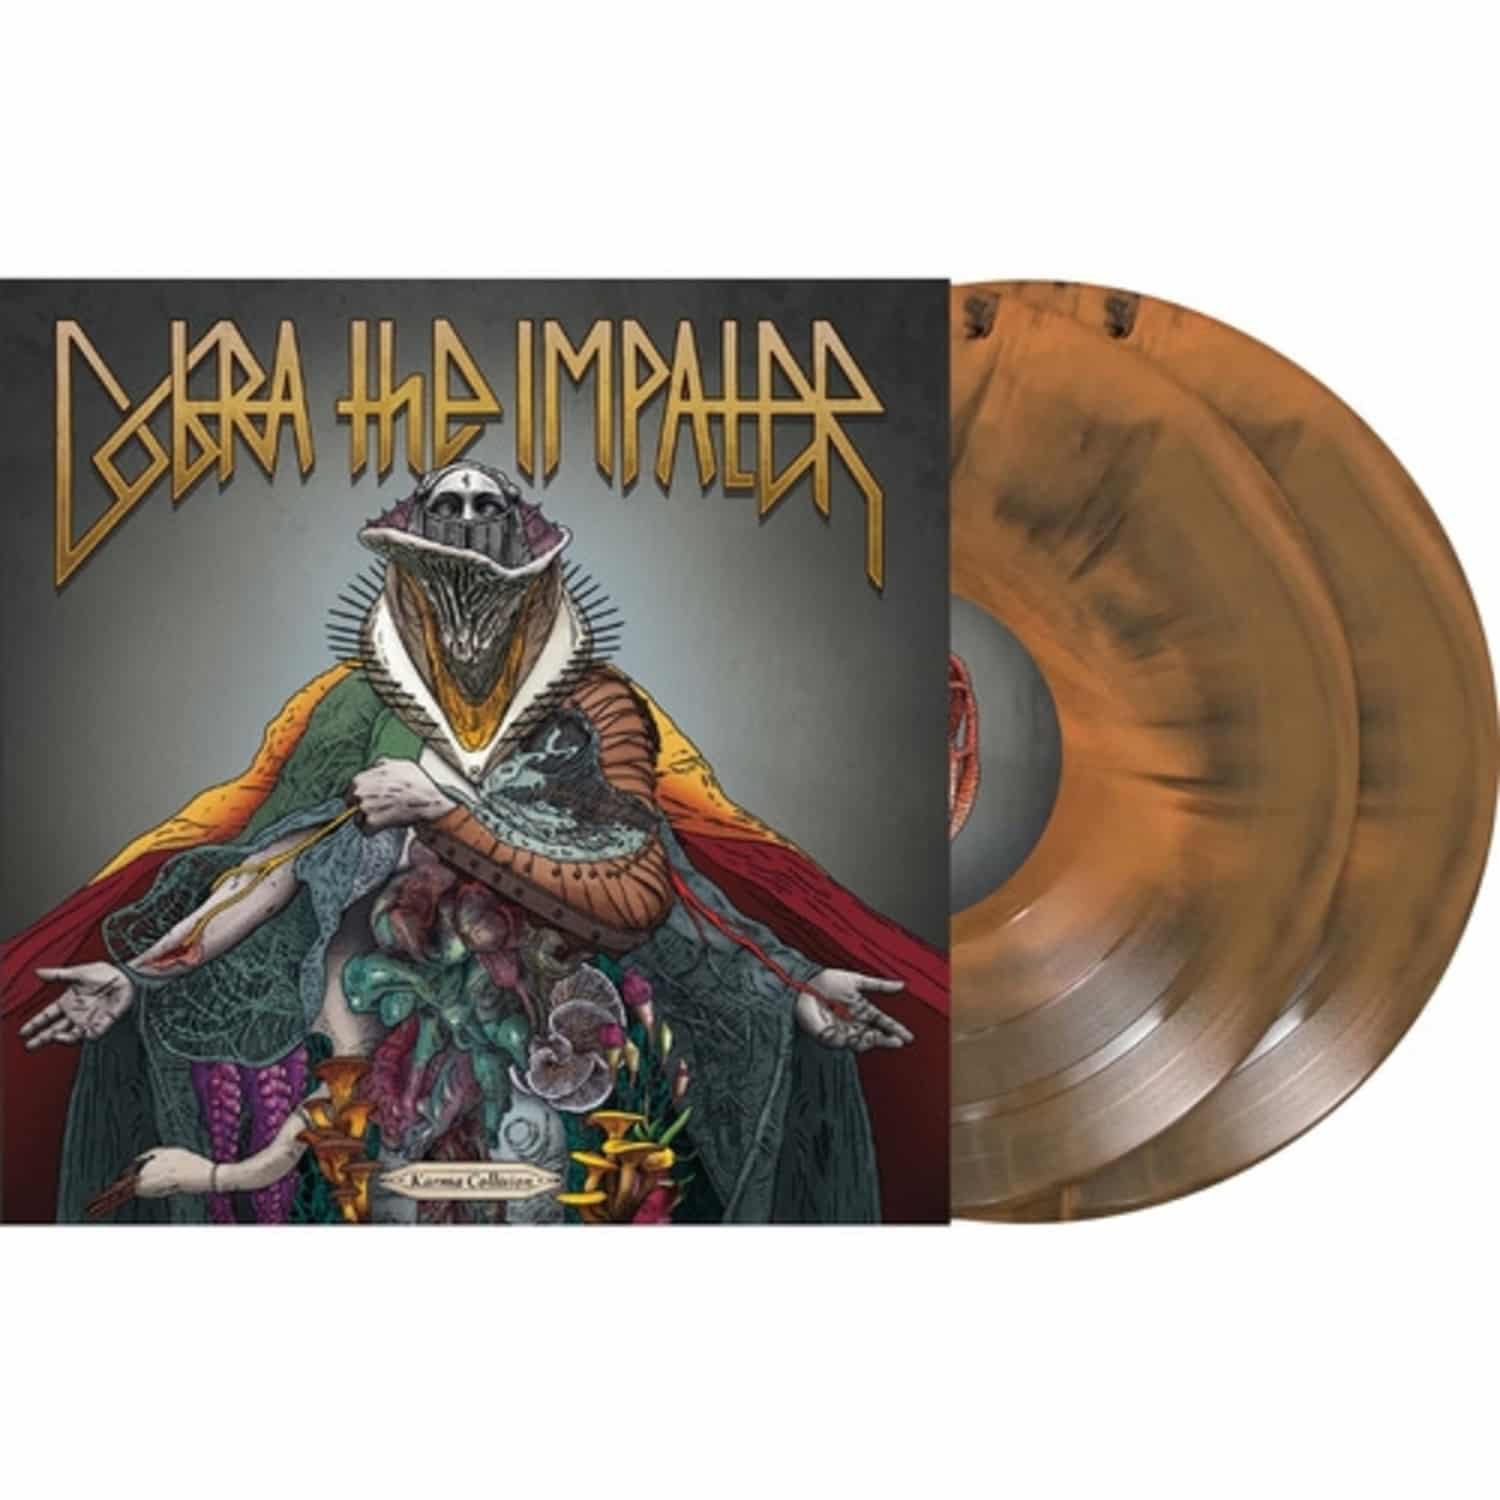 Cobra The Impaler - KARMA COLLISION 